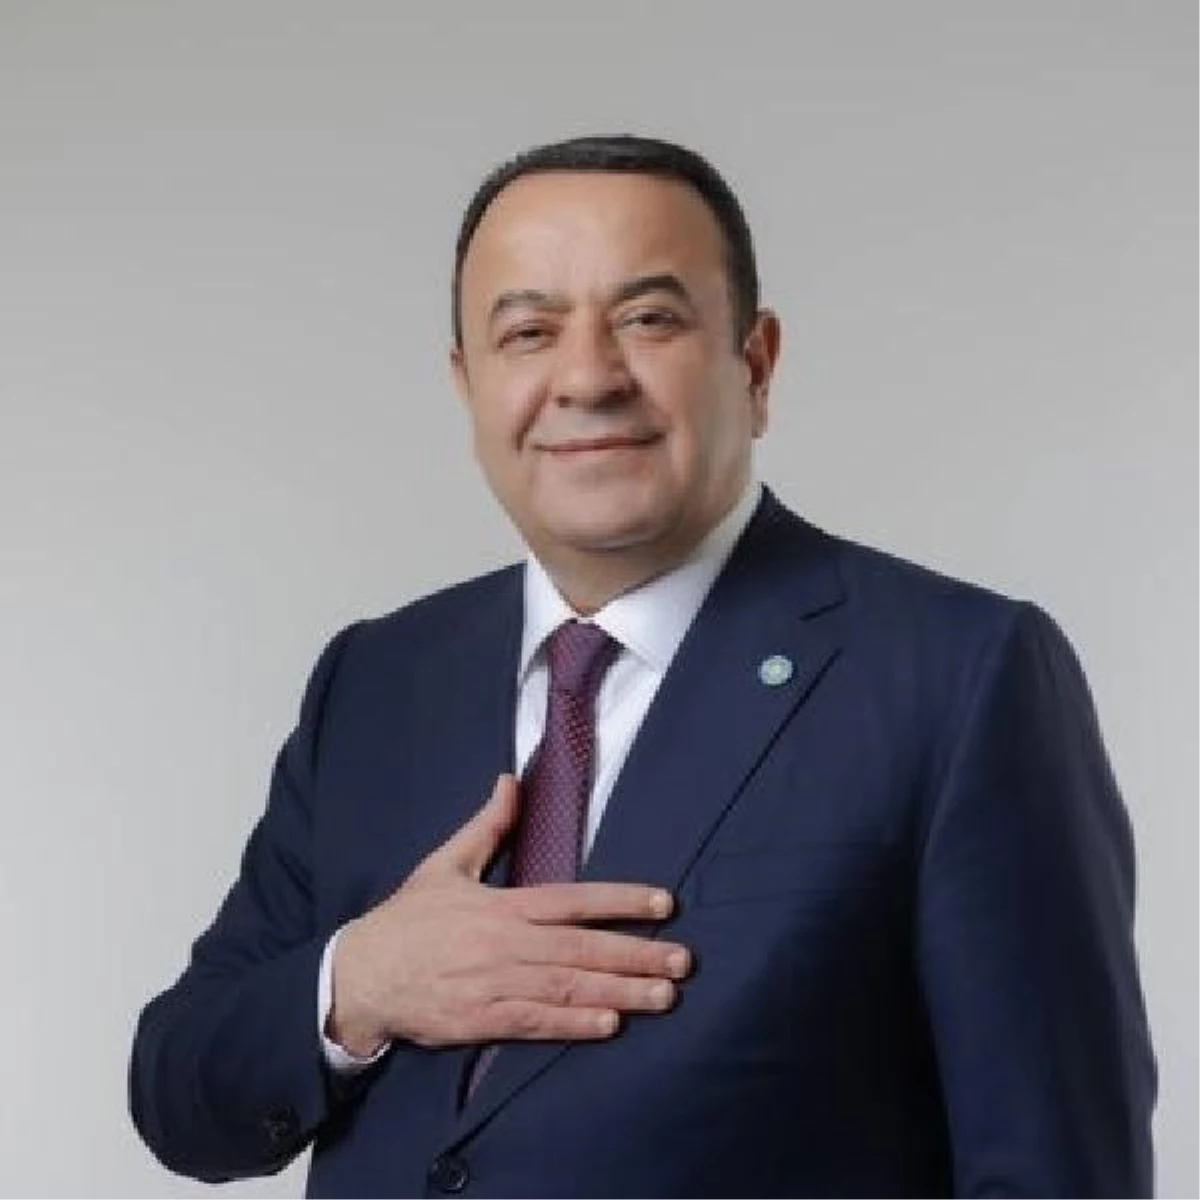 İYİ Parti Ankara Milletvekili Adnan Beker İstifa Etti